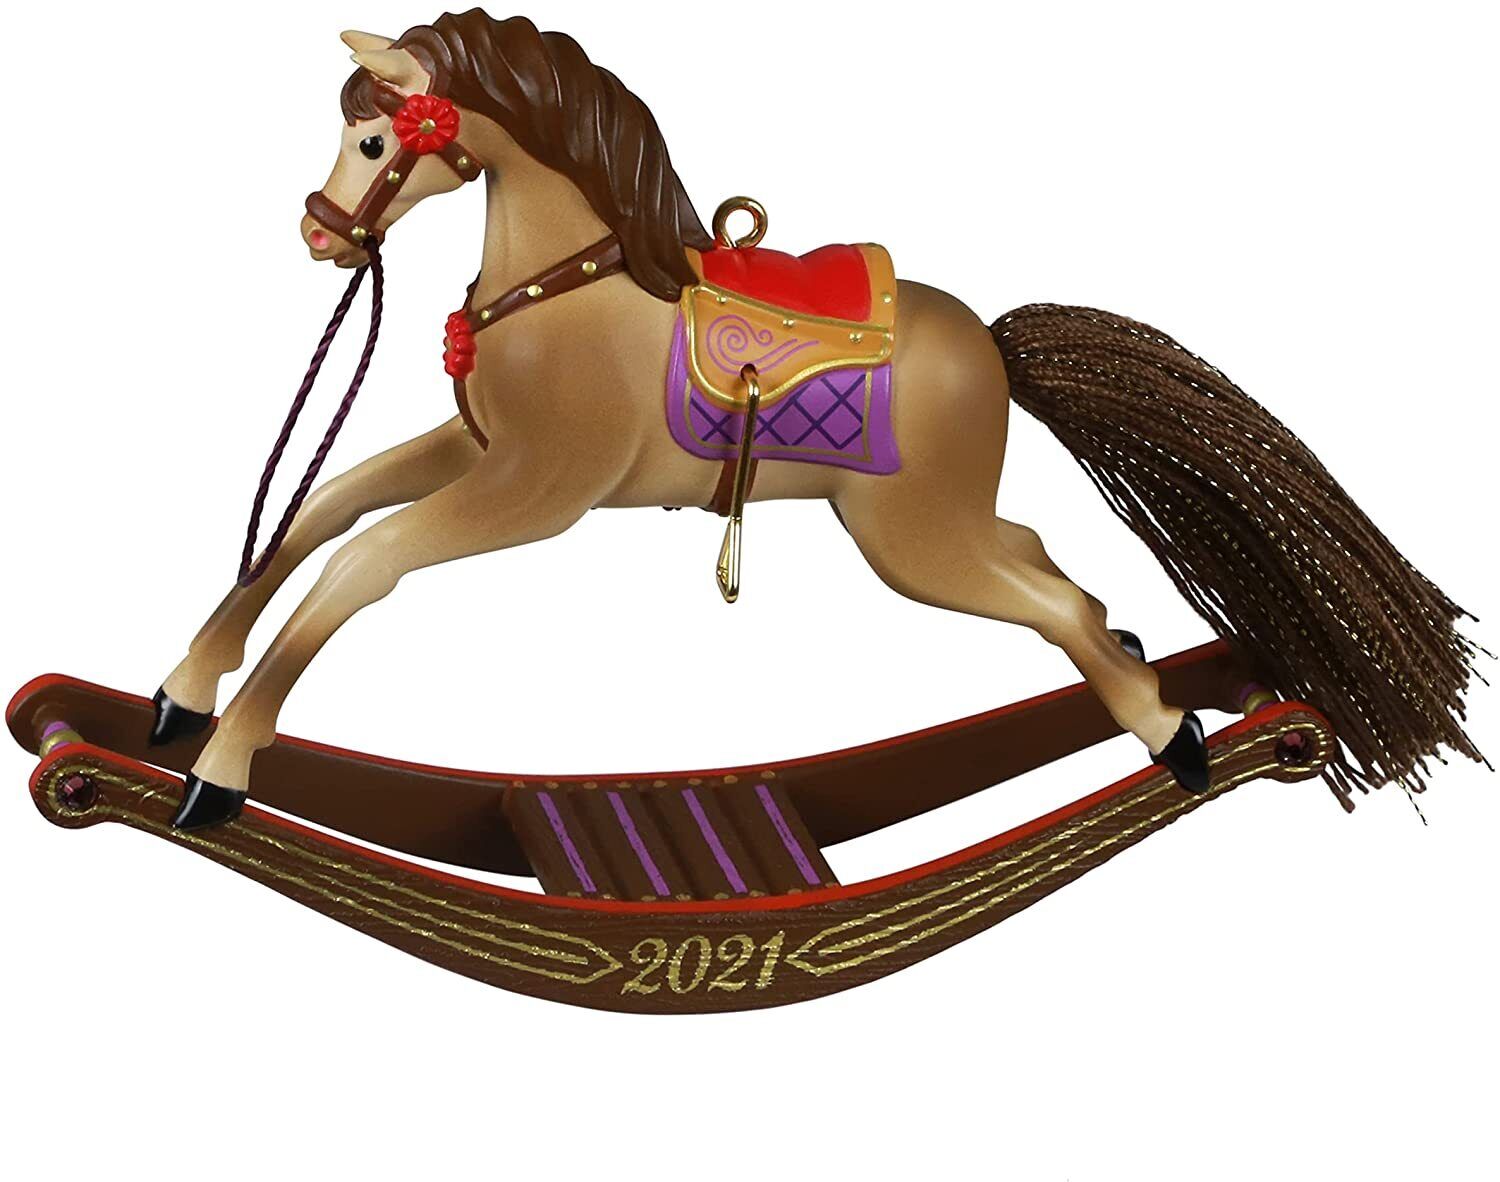 Hallmark Ornament 2021 - Rocking Horse Memories